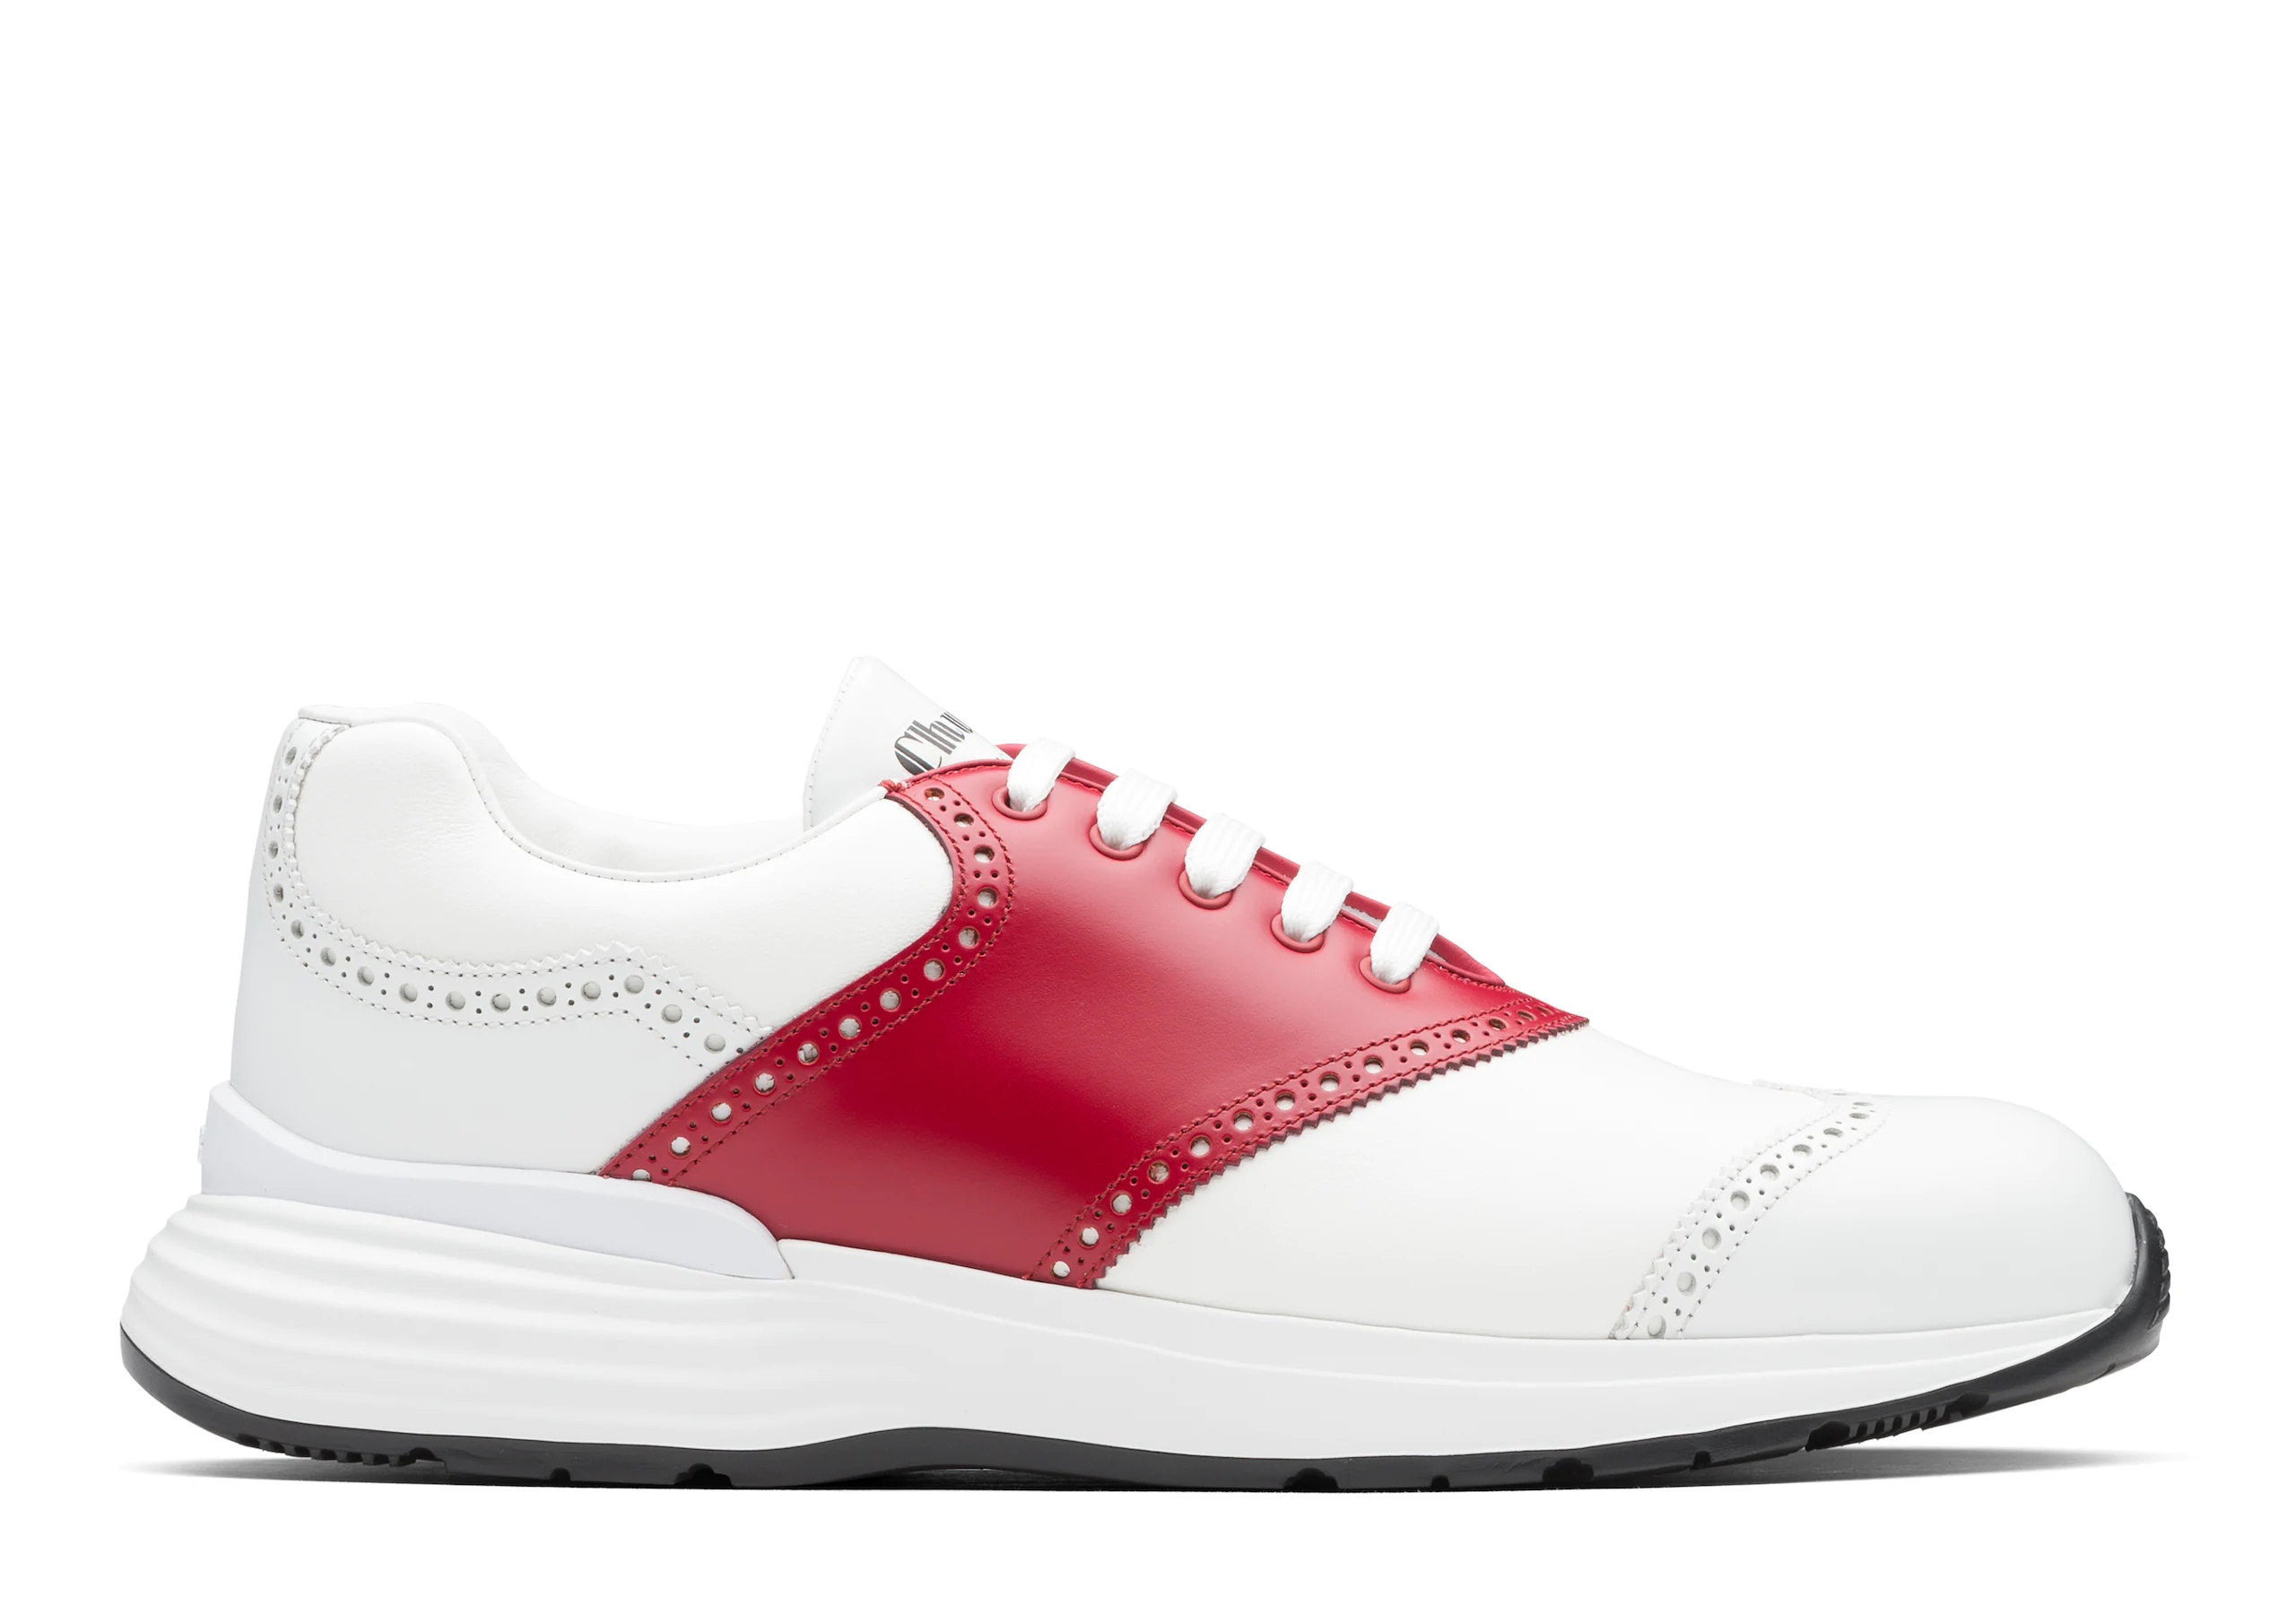 Ch873 golf
Rois Calf Sneaker White/scarlet - 1